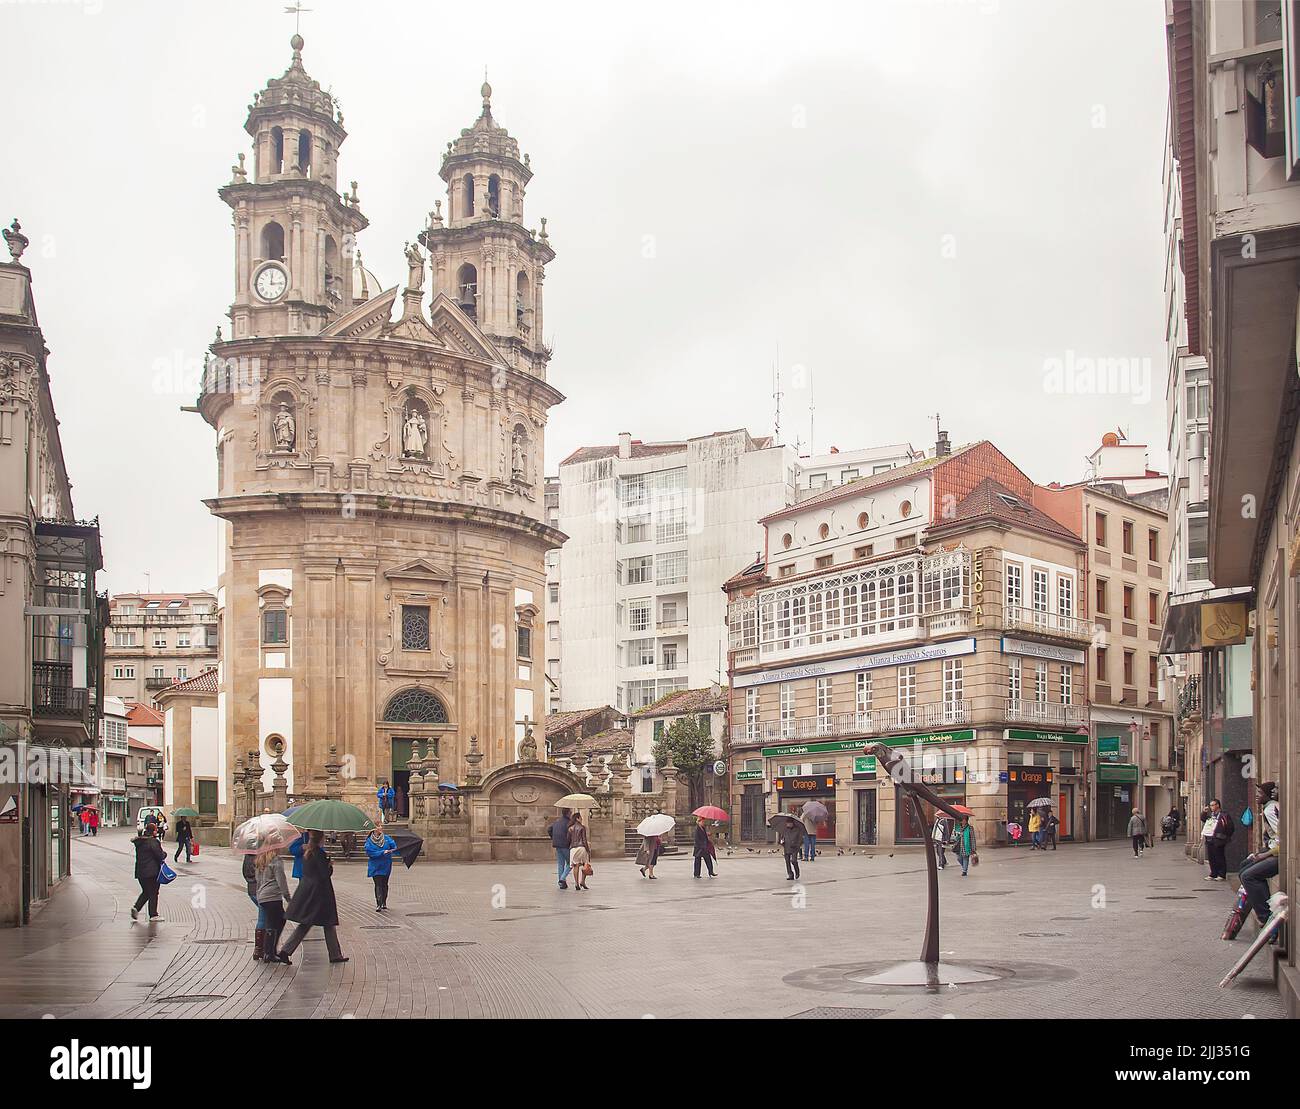 Pedestrianised city centre Pontevedra, Galicia, Spain on a rainy day Stock Photo